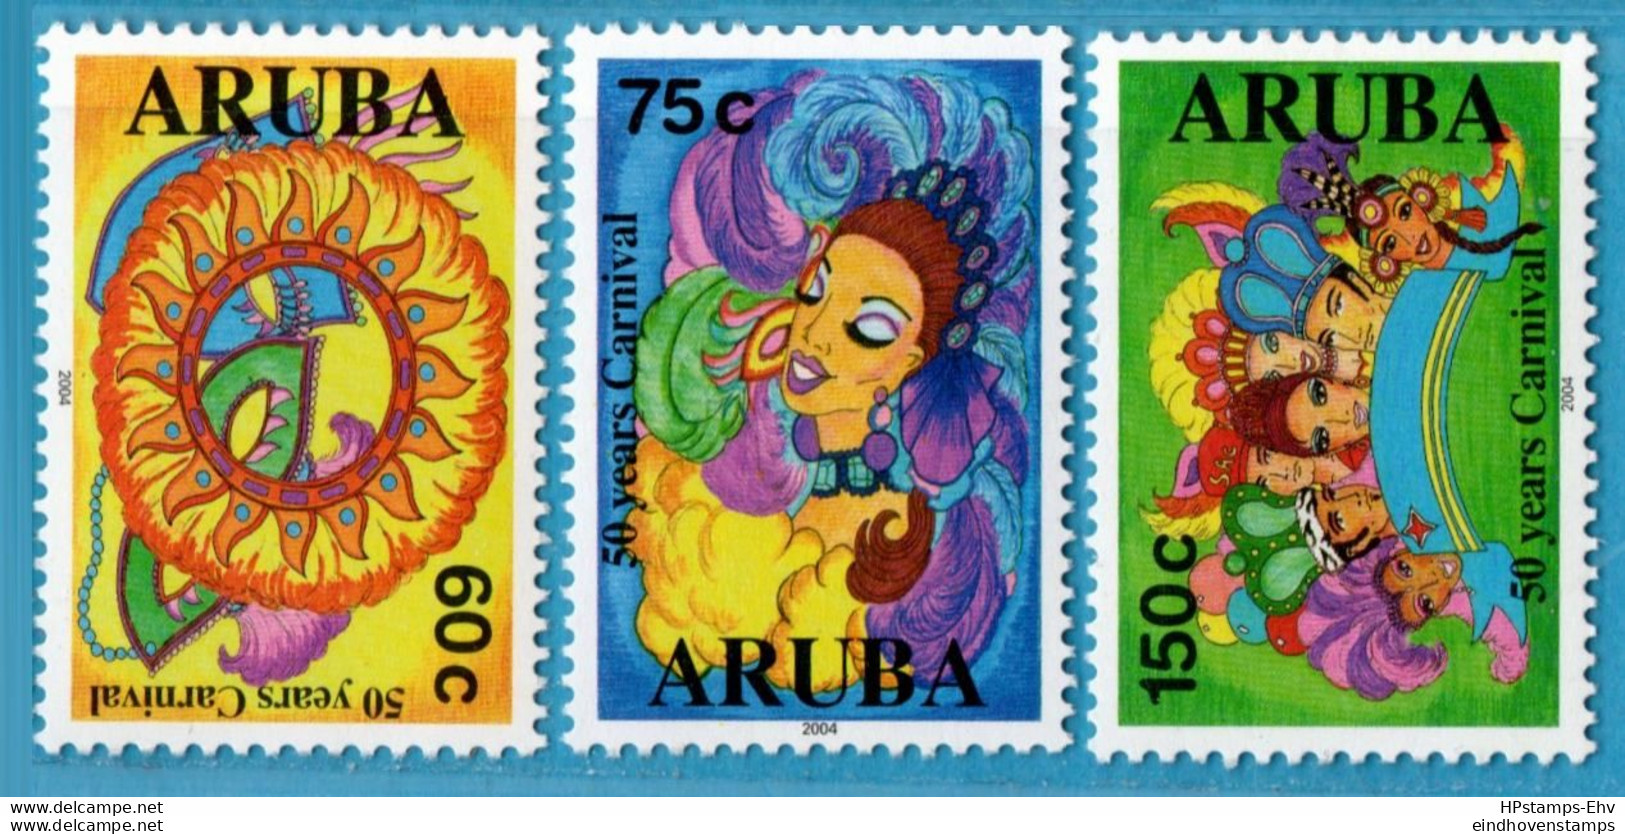 Aruba 2004 Carnavale 3 Values 04-01 MNH Masks, Costumes - Carnavales